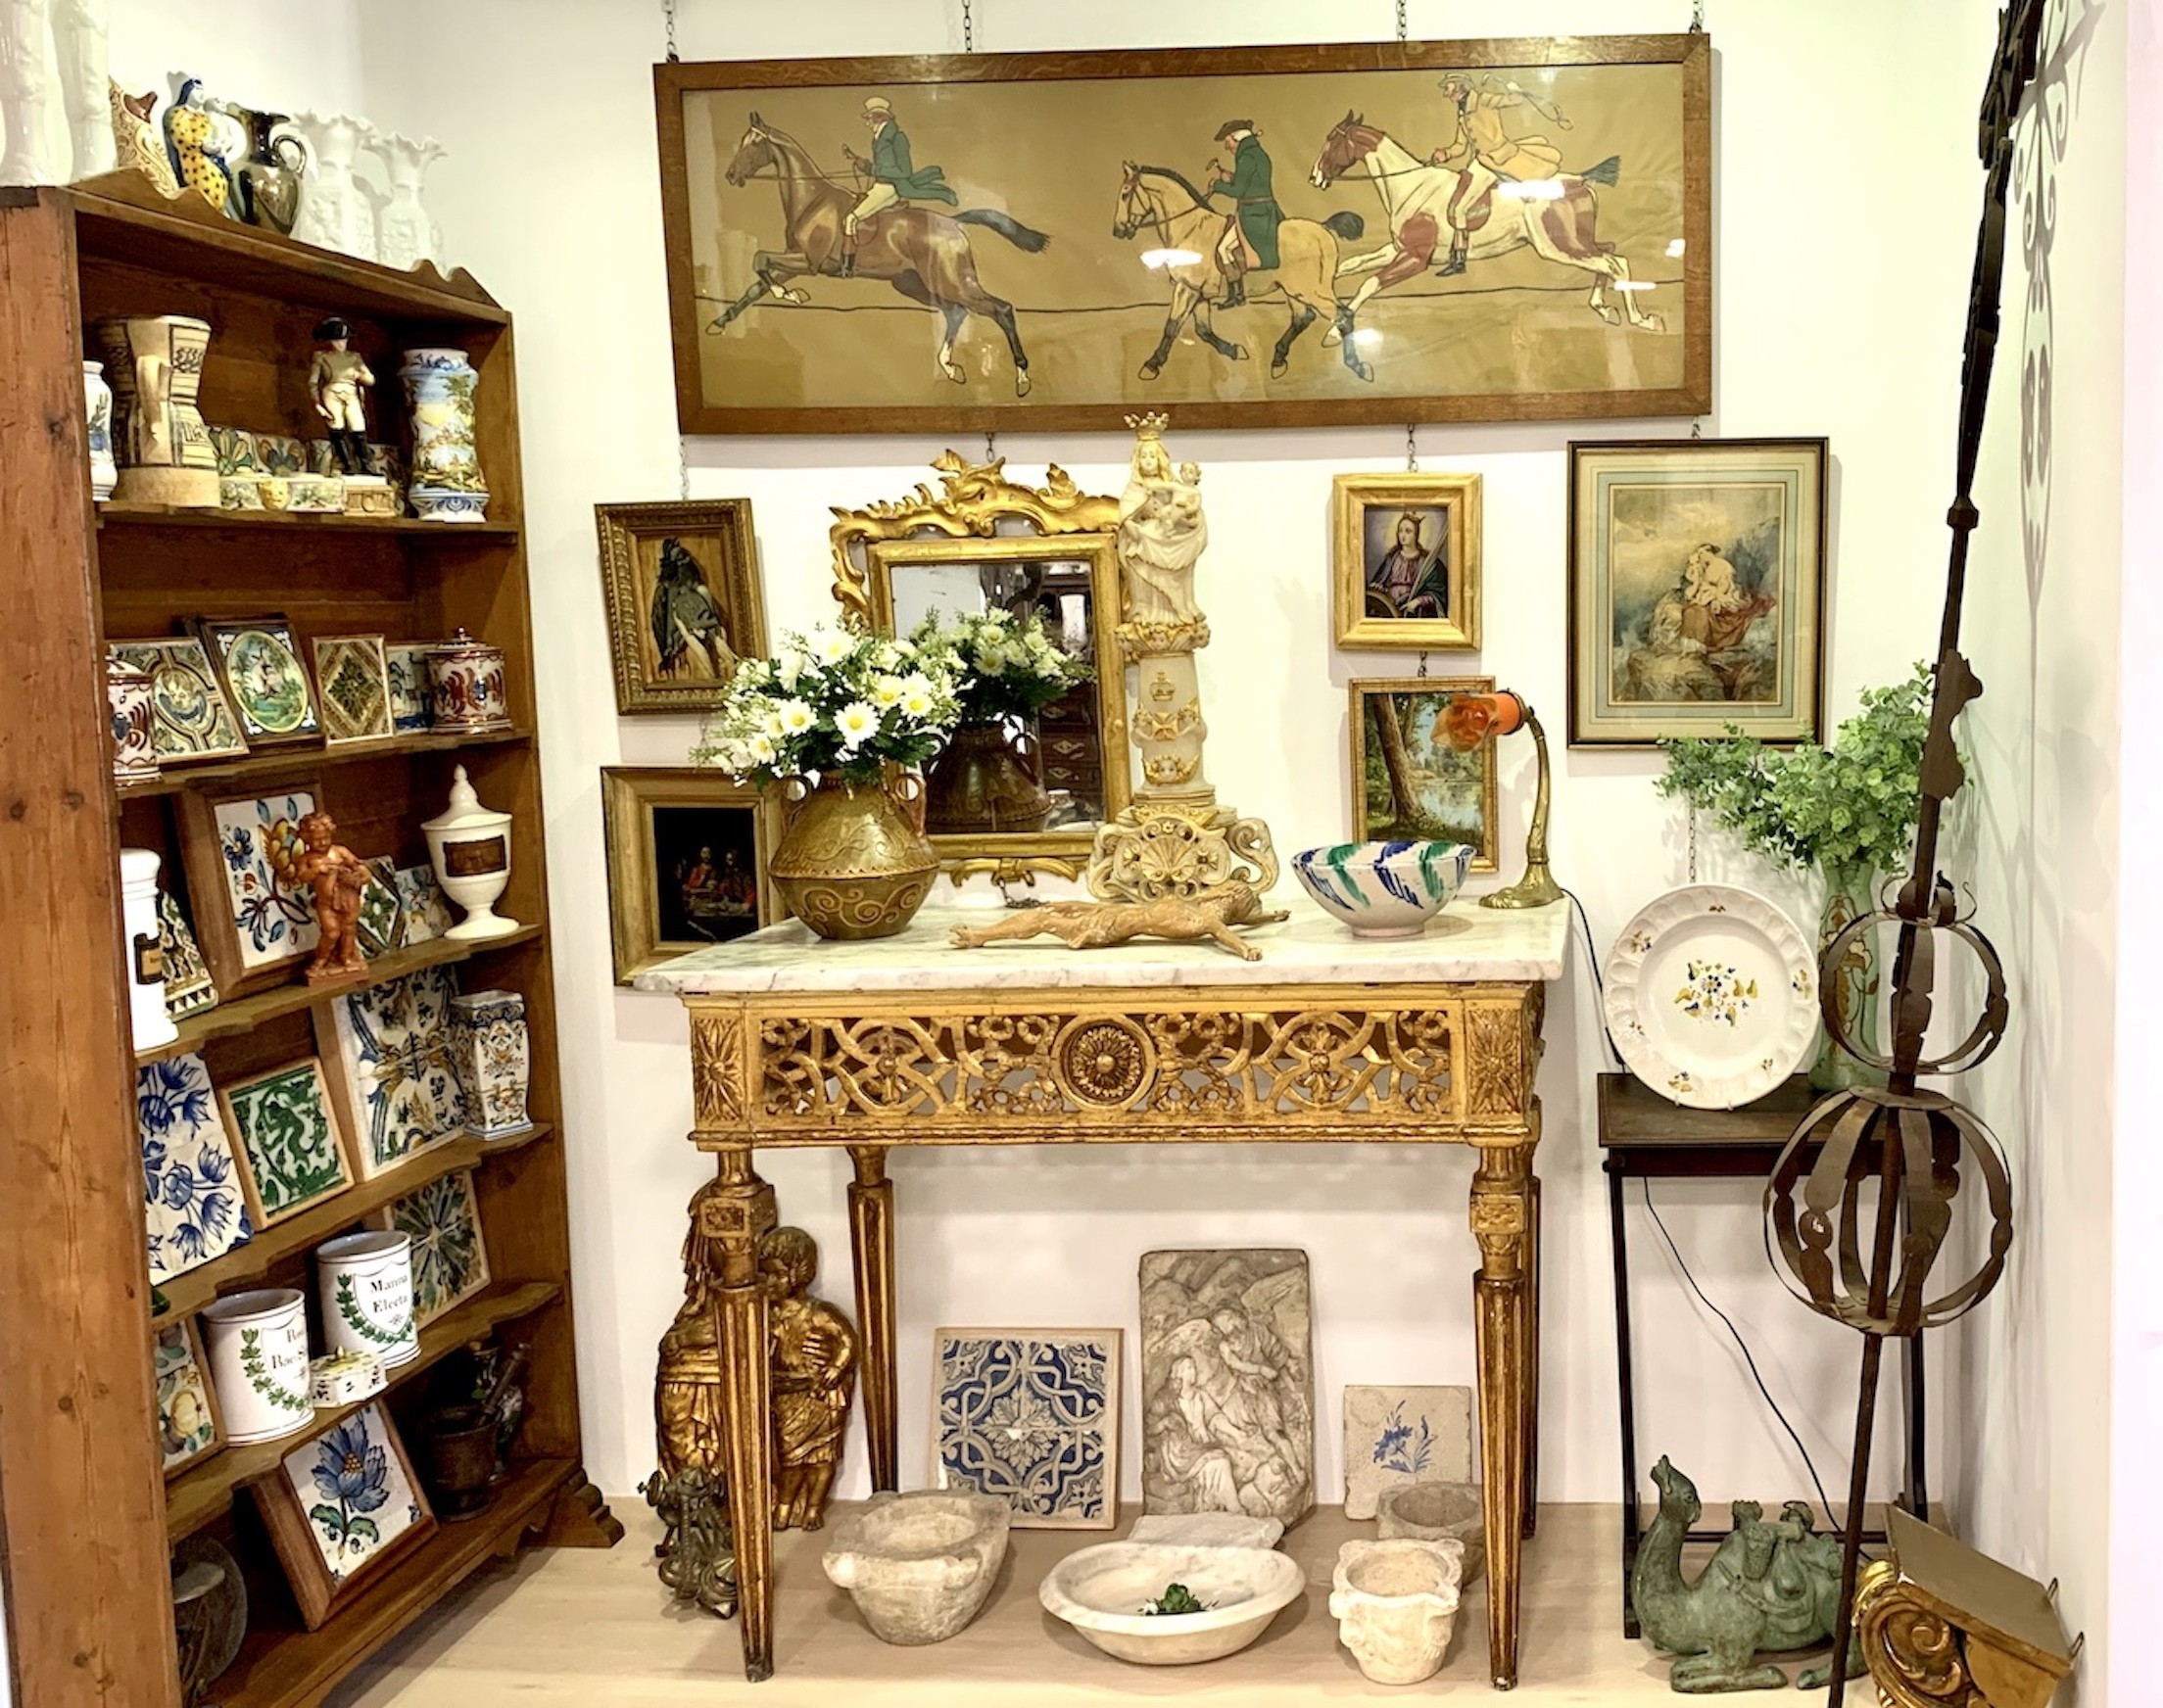 ANTIGUART antiques and decoration